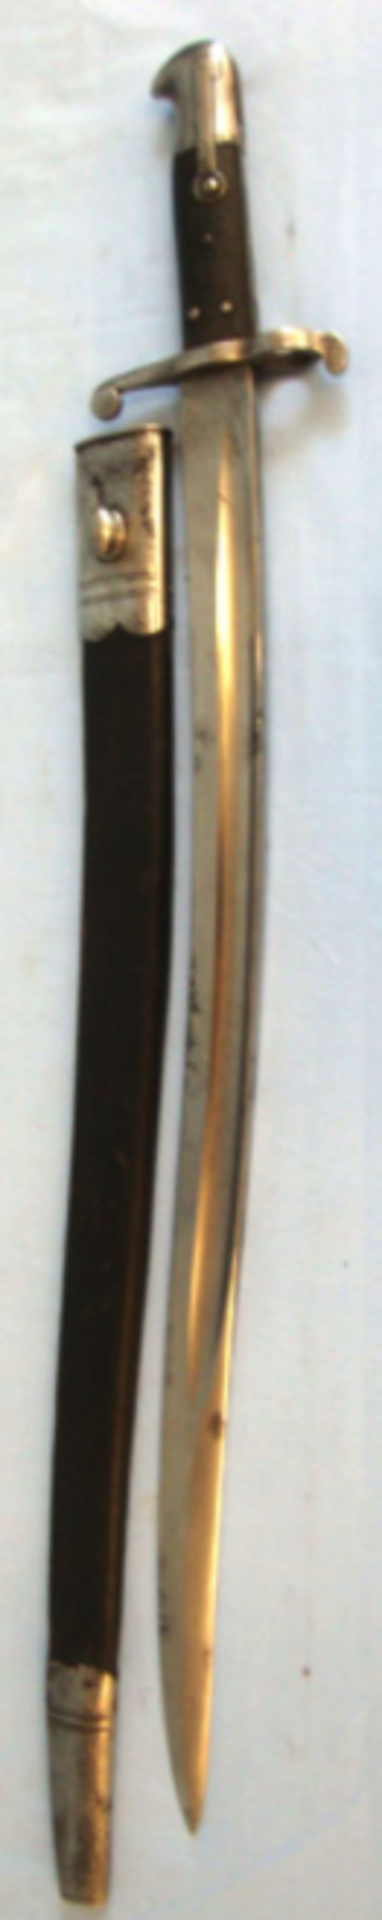 British 1860 Sword Bayonet and Scabbard. - Image 2 of 3